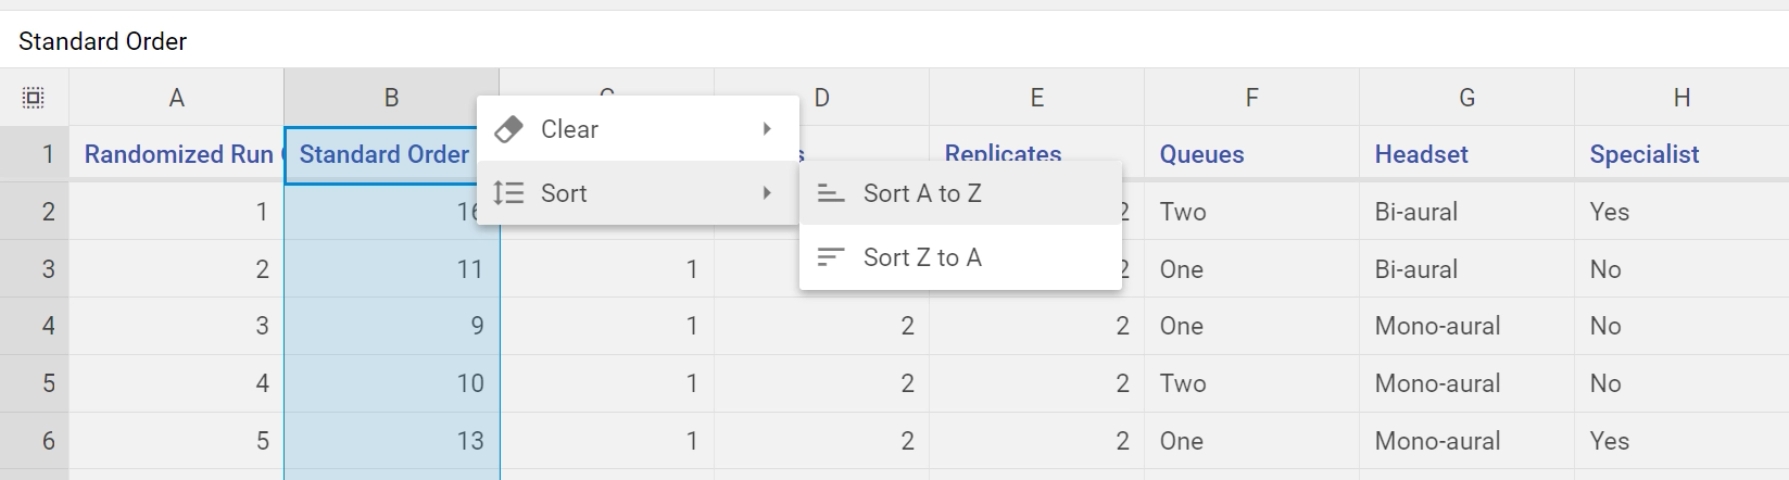 Data Editor interface highlighting the 'Sort' method for the Standard Order column